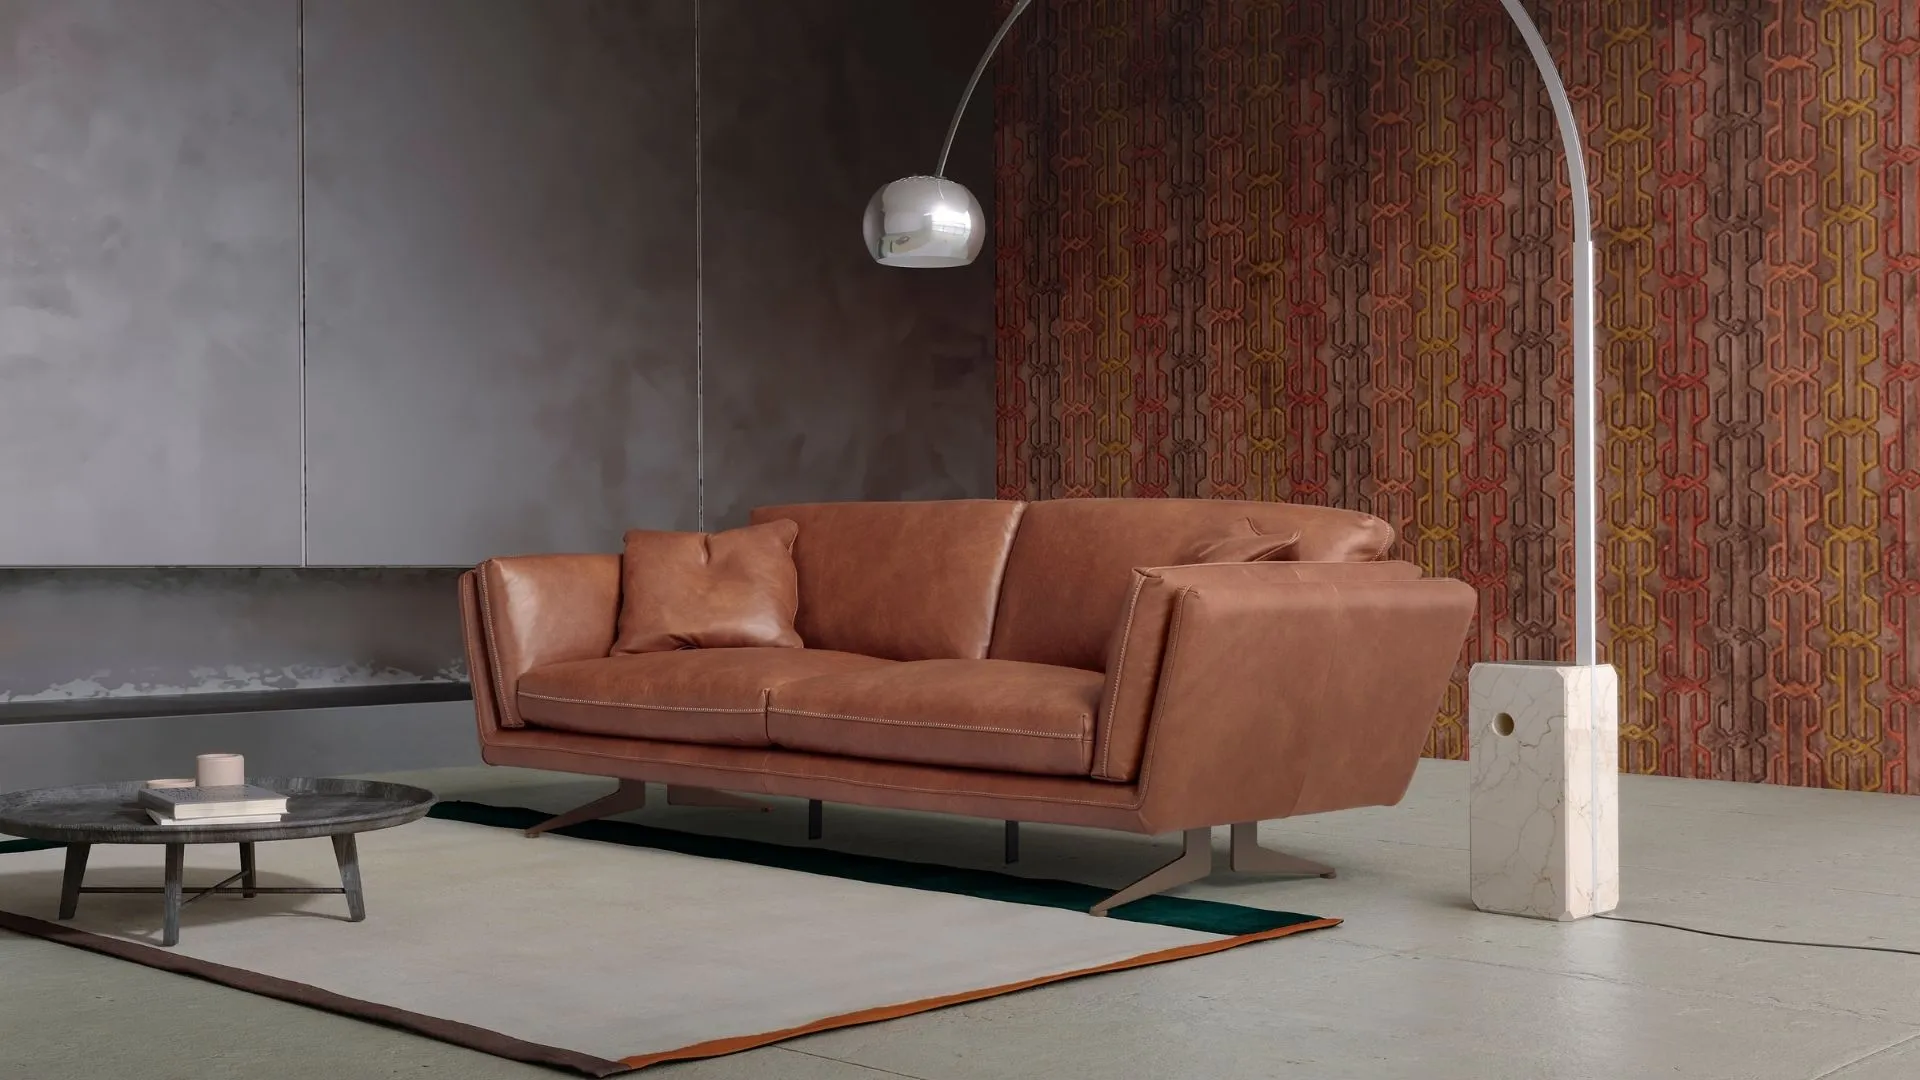 Marinelli Home - Elite - Sofa